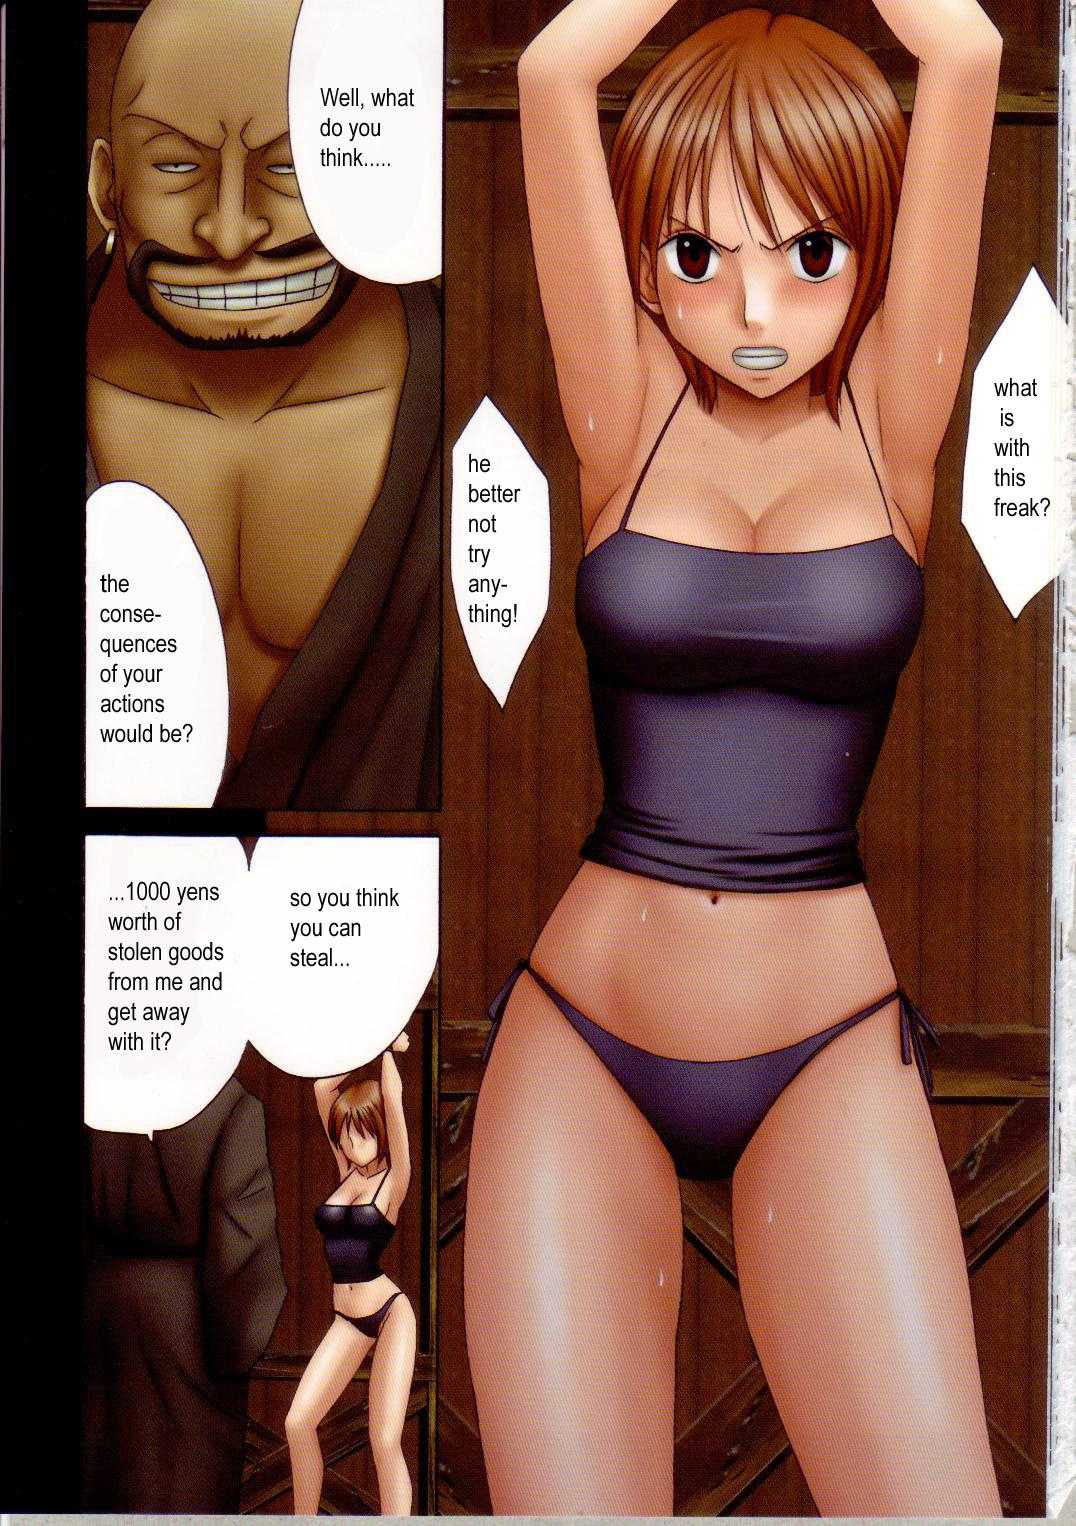 [Crimson Comics] The Tragedy of Nami (One Piece)[English] 